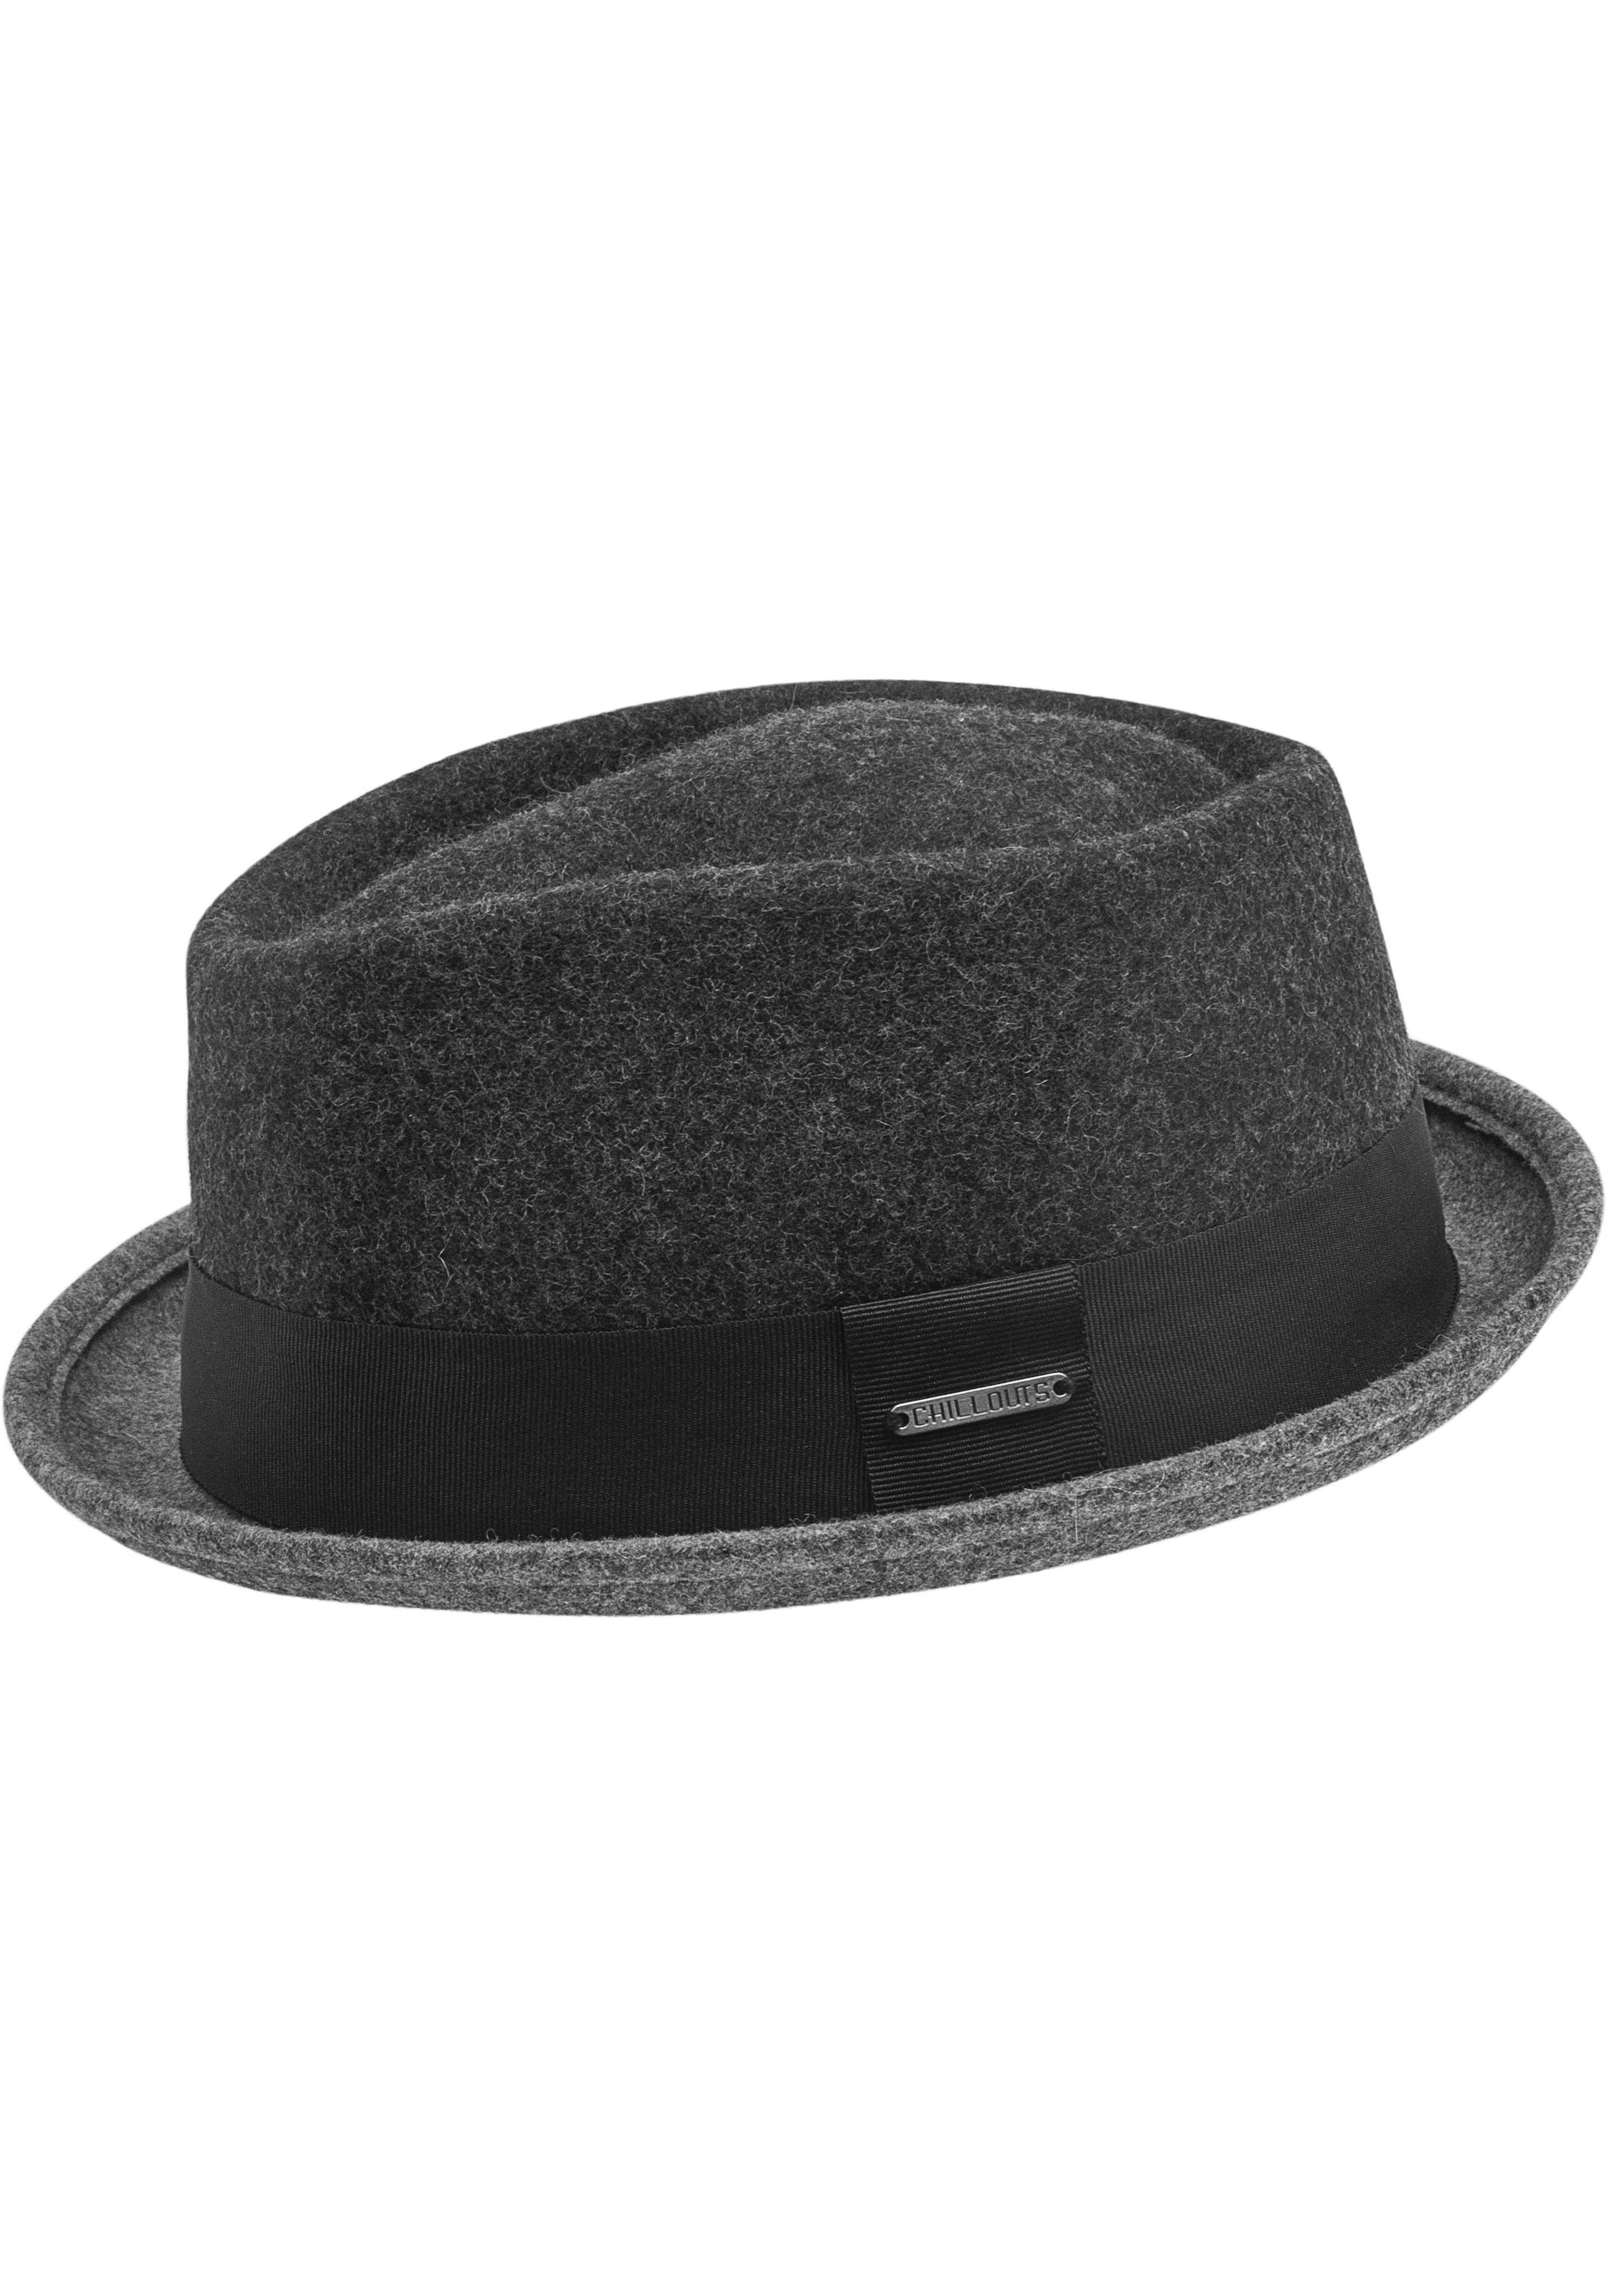 chillouts Skrybėlė »Neal Hat«